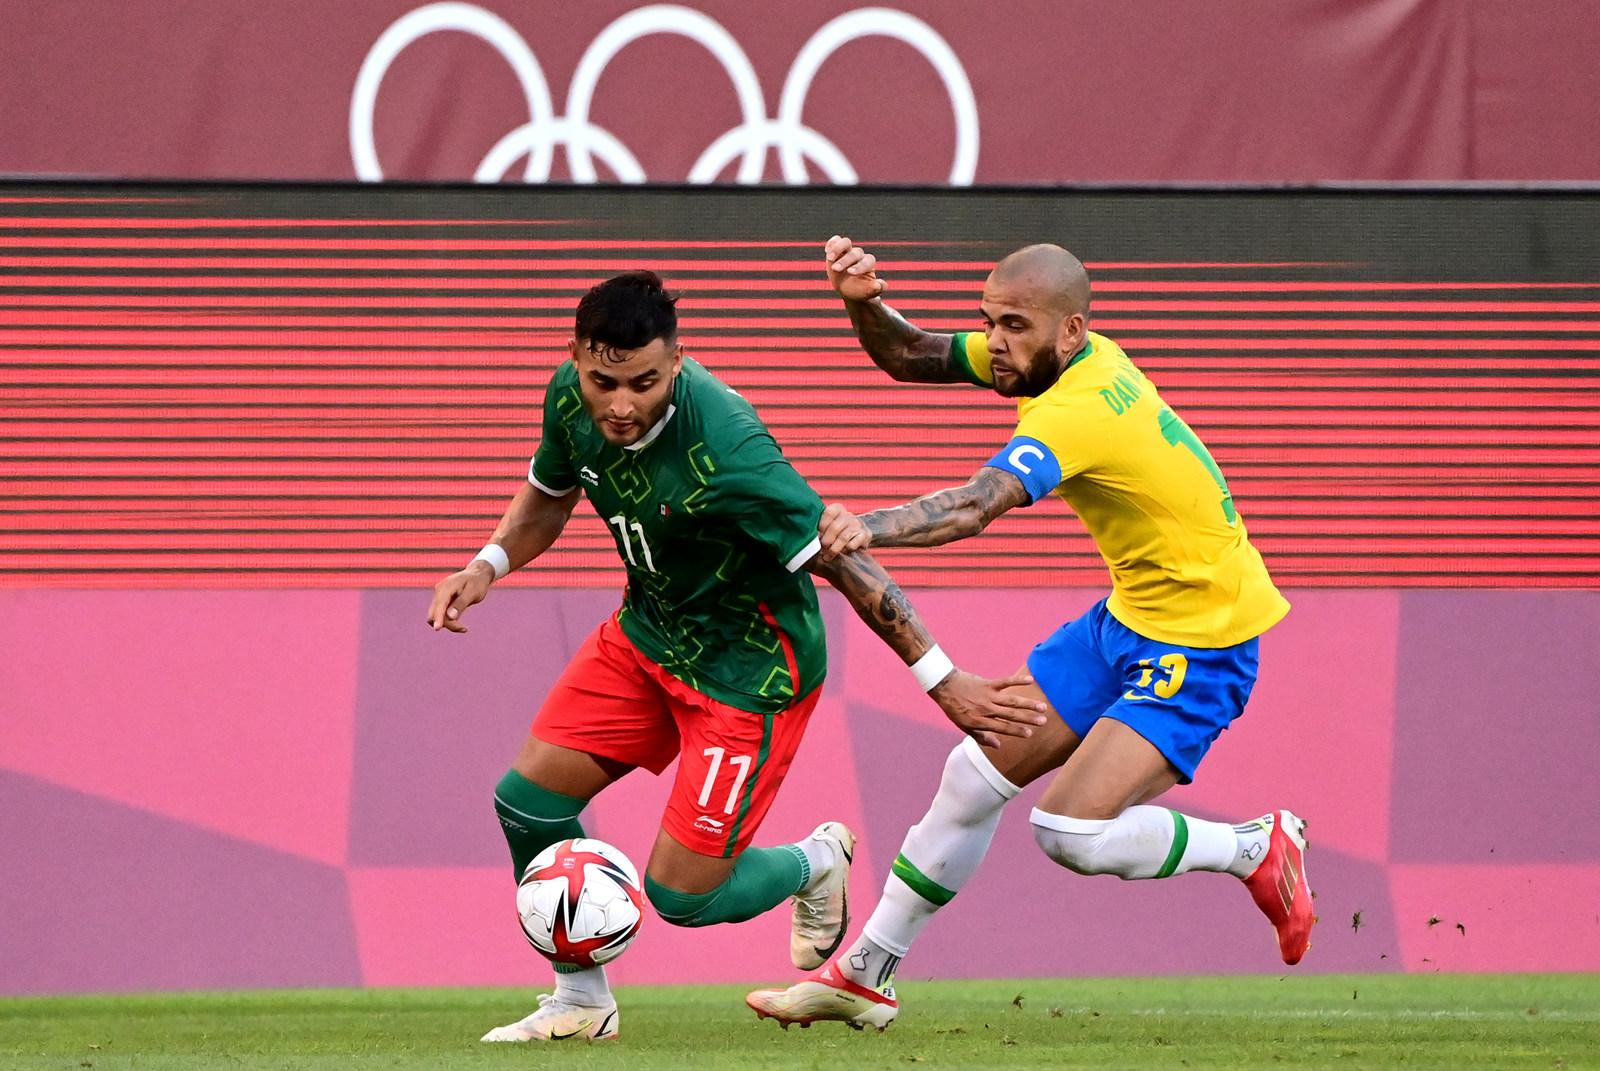 Atletas de Brasil e México disputam bola